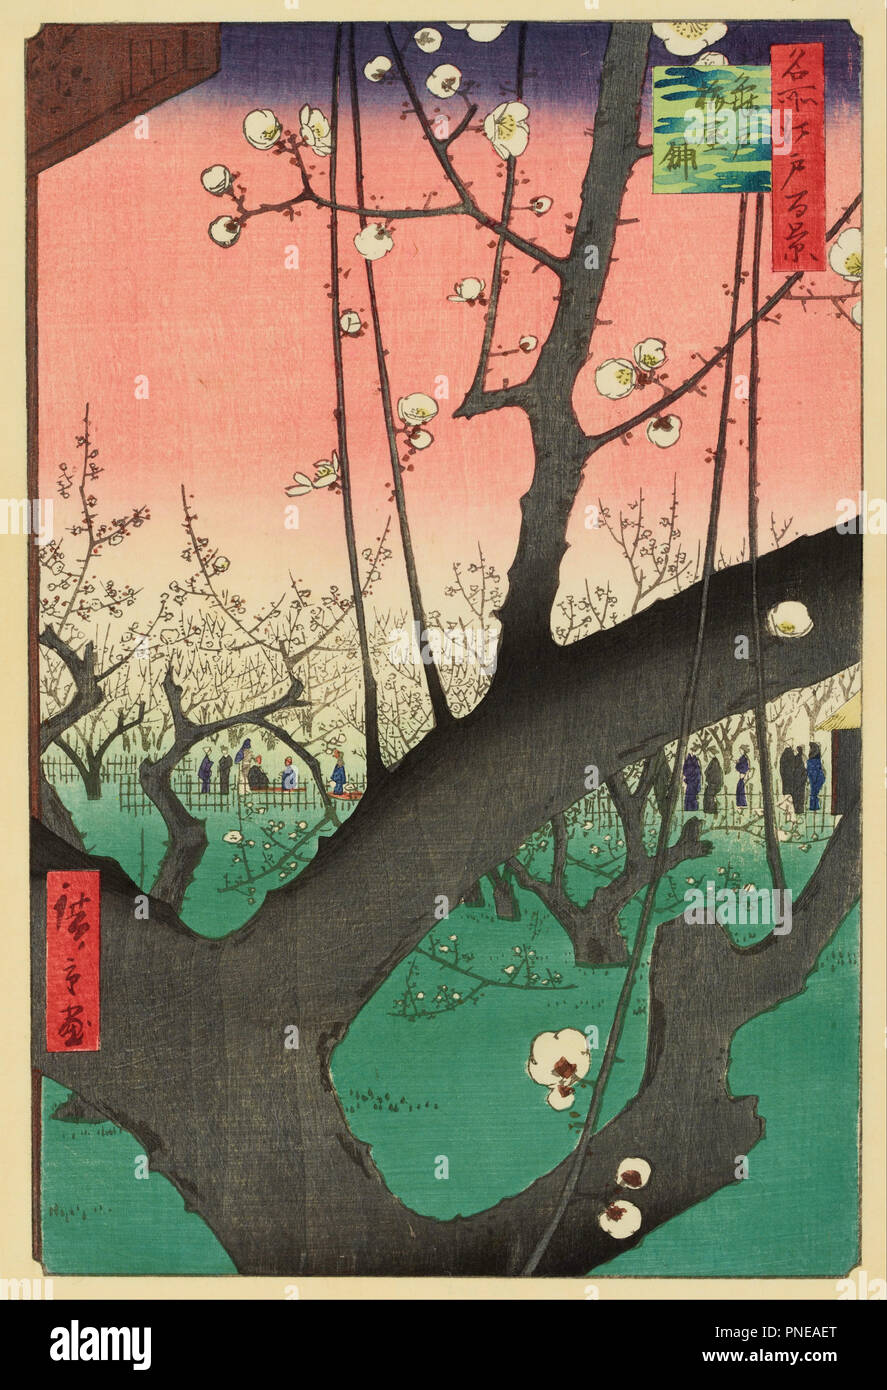 Plum Garden, Kameido. Date/Period: 1857. Woodblock print. Width: 8.9 in. Height: 13.5 in. Author: Ando Hiroshige. Utagawa Hiroshige. Stock Photo